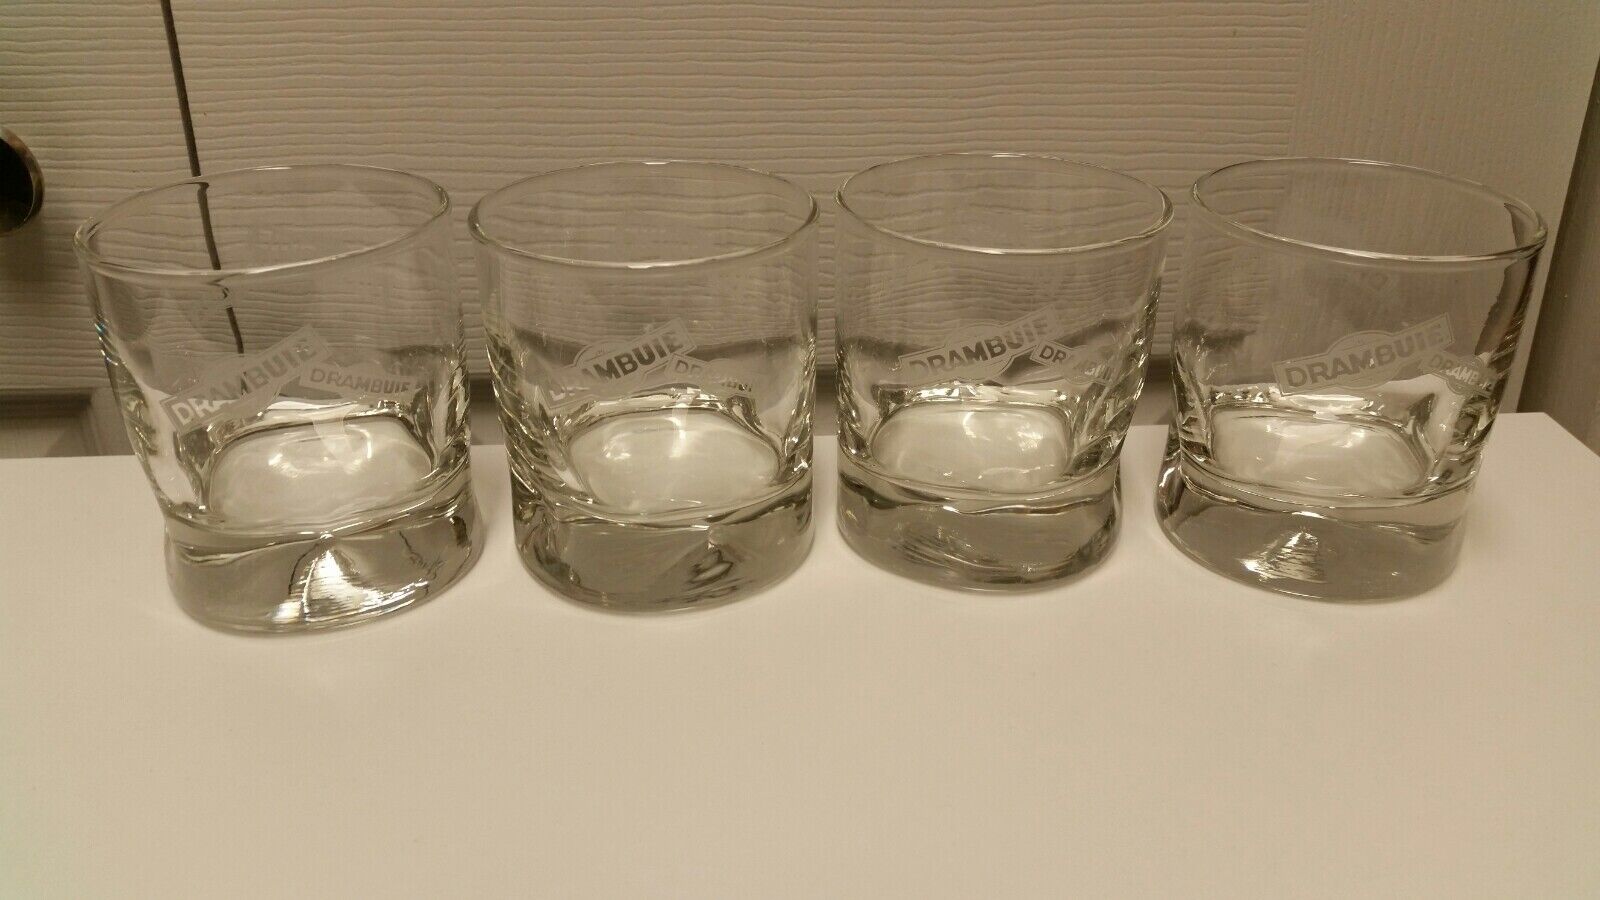 Drambuie Rocks Glasses Matching Set of 4 Drambuie